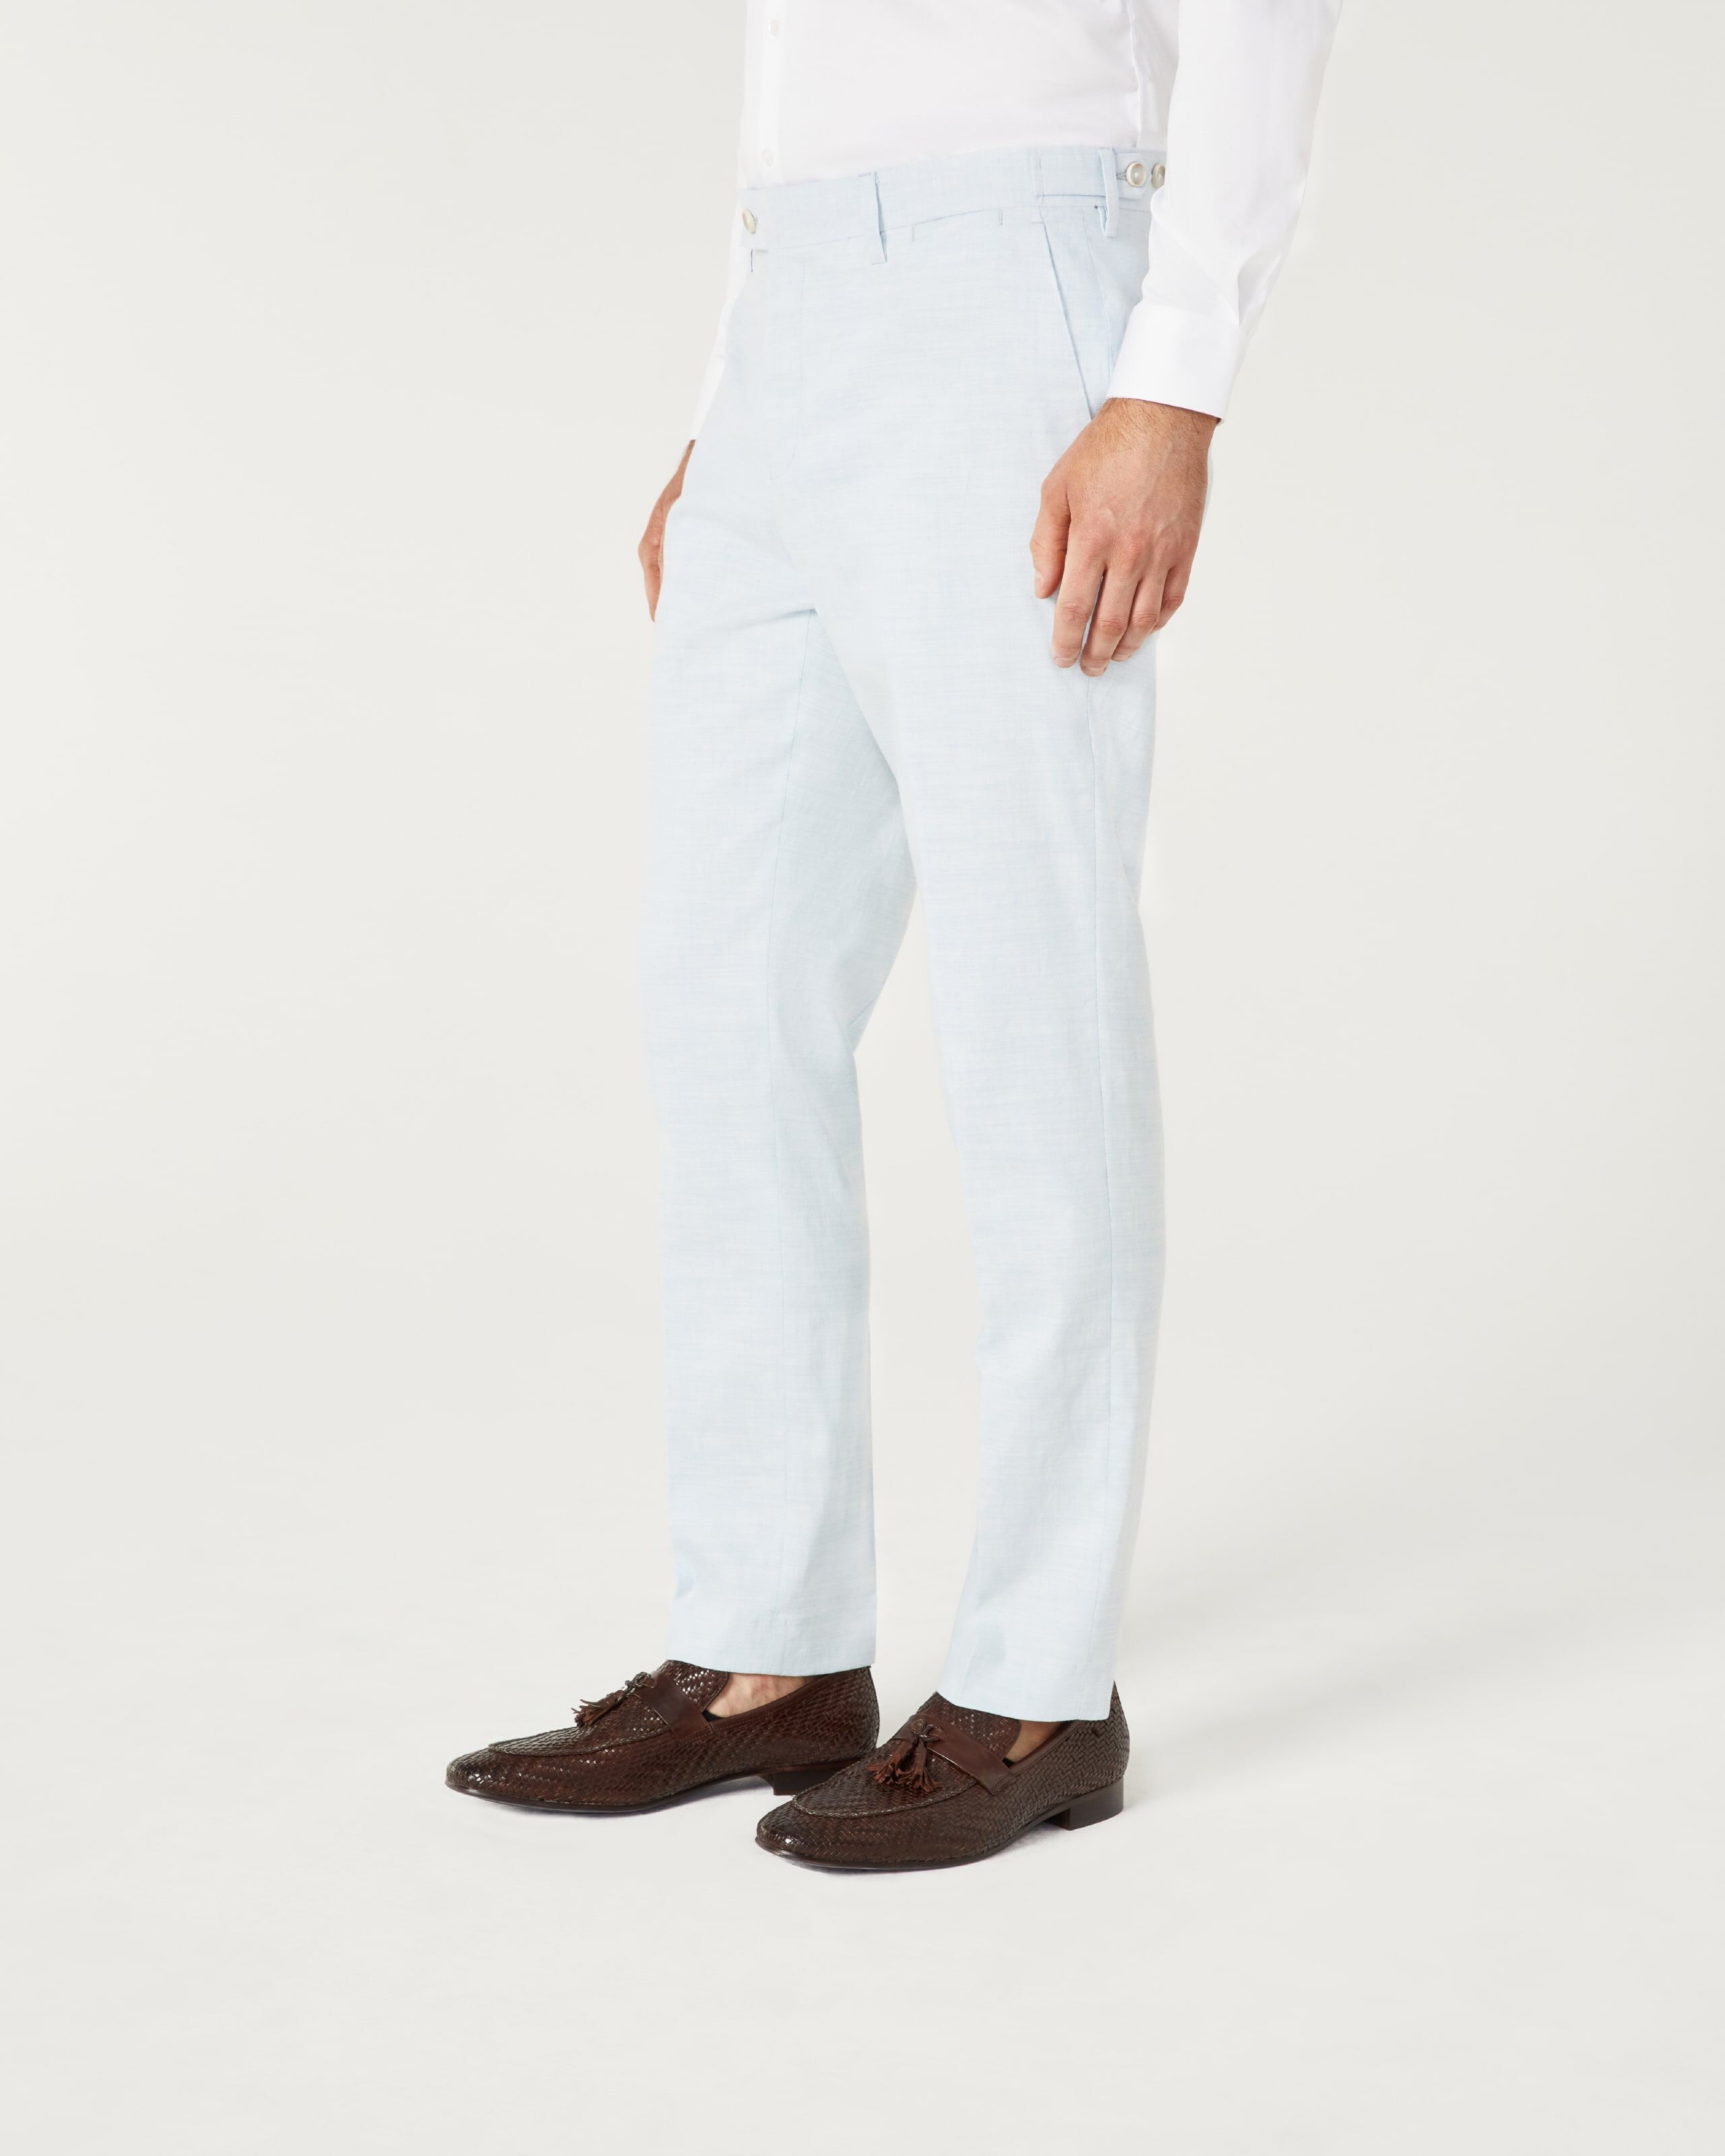 Men's White Formal & Business Flat Front Dress Pants